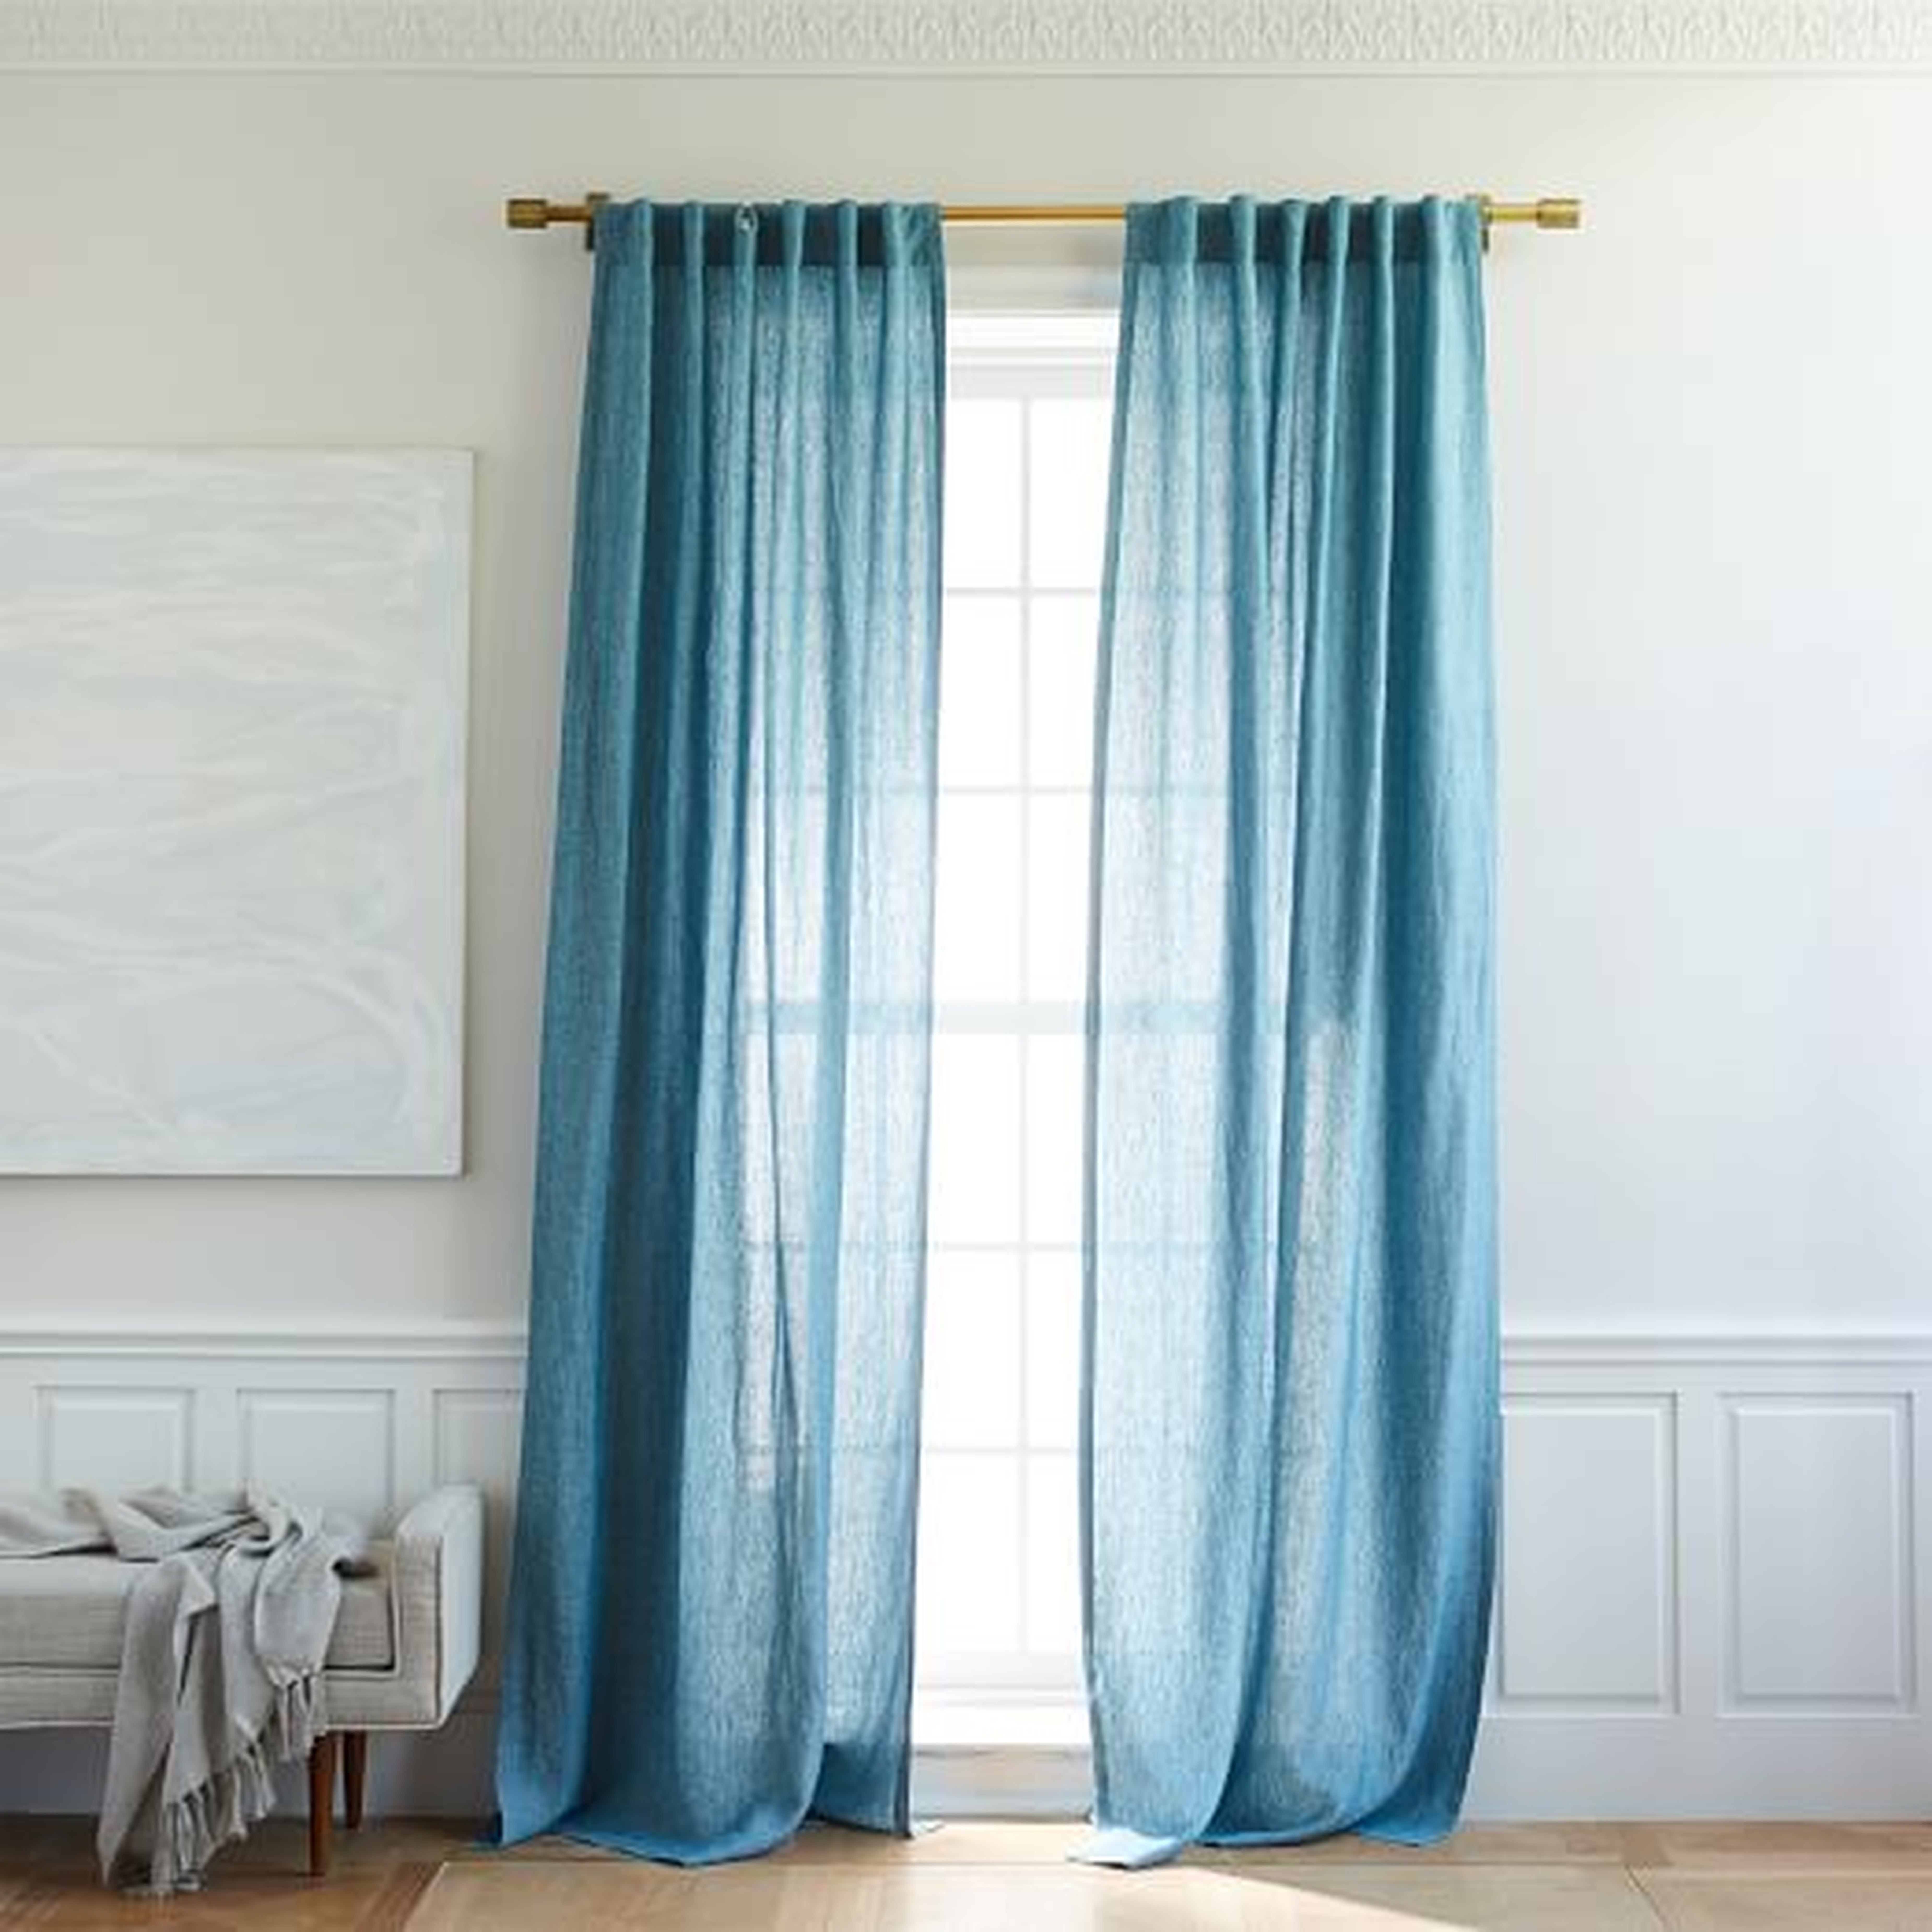 Belgian Flax Linen Melange Curtain - Blue Teal - West Elm